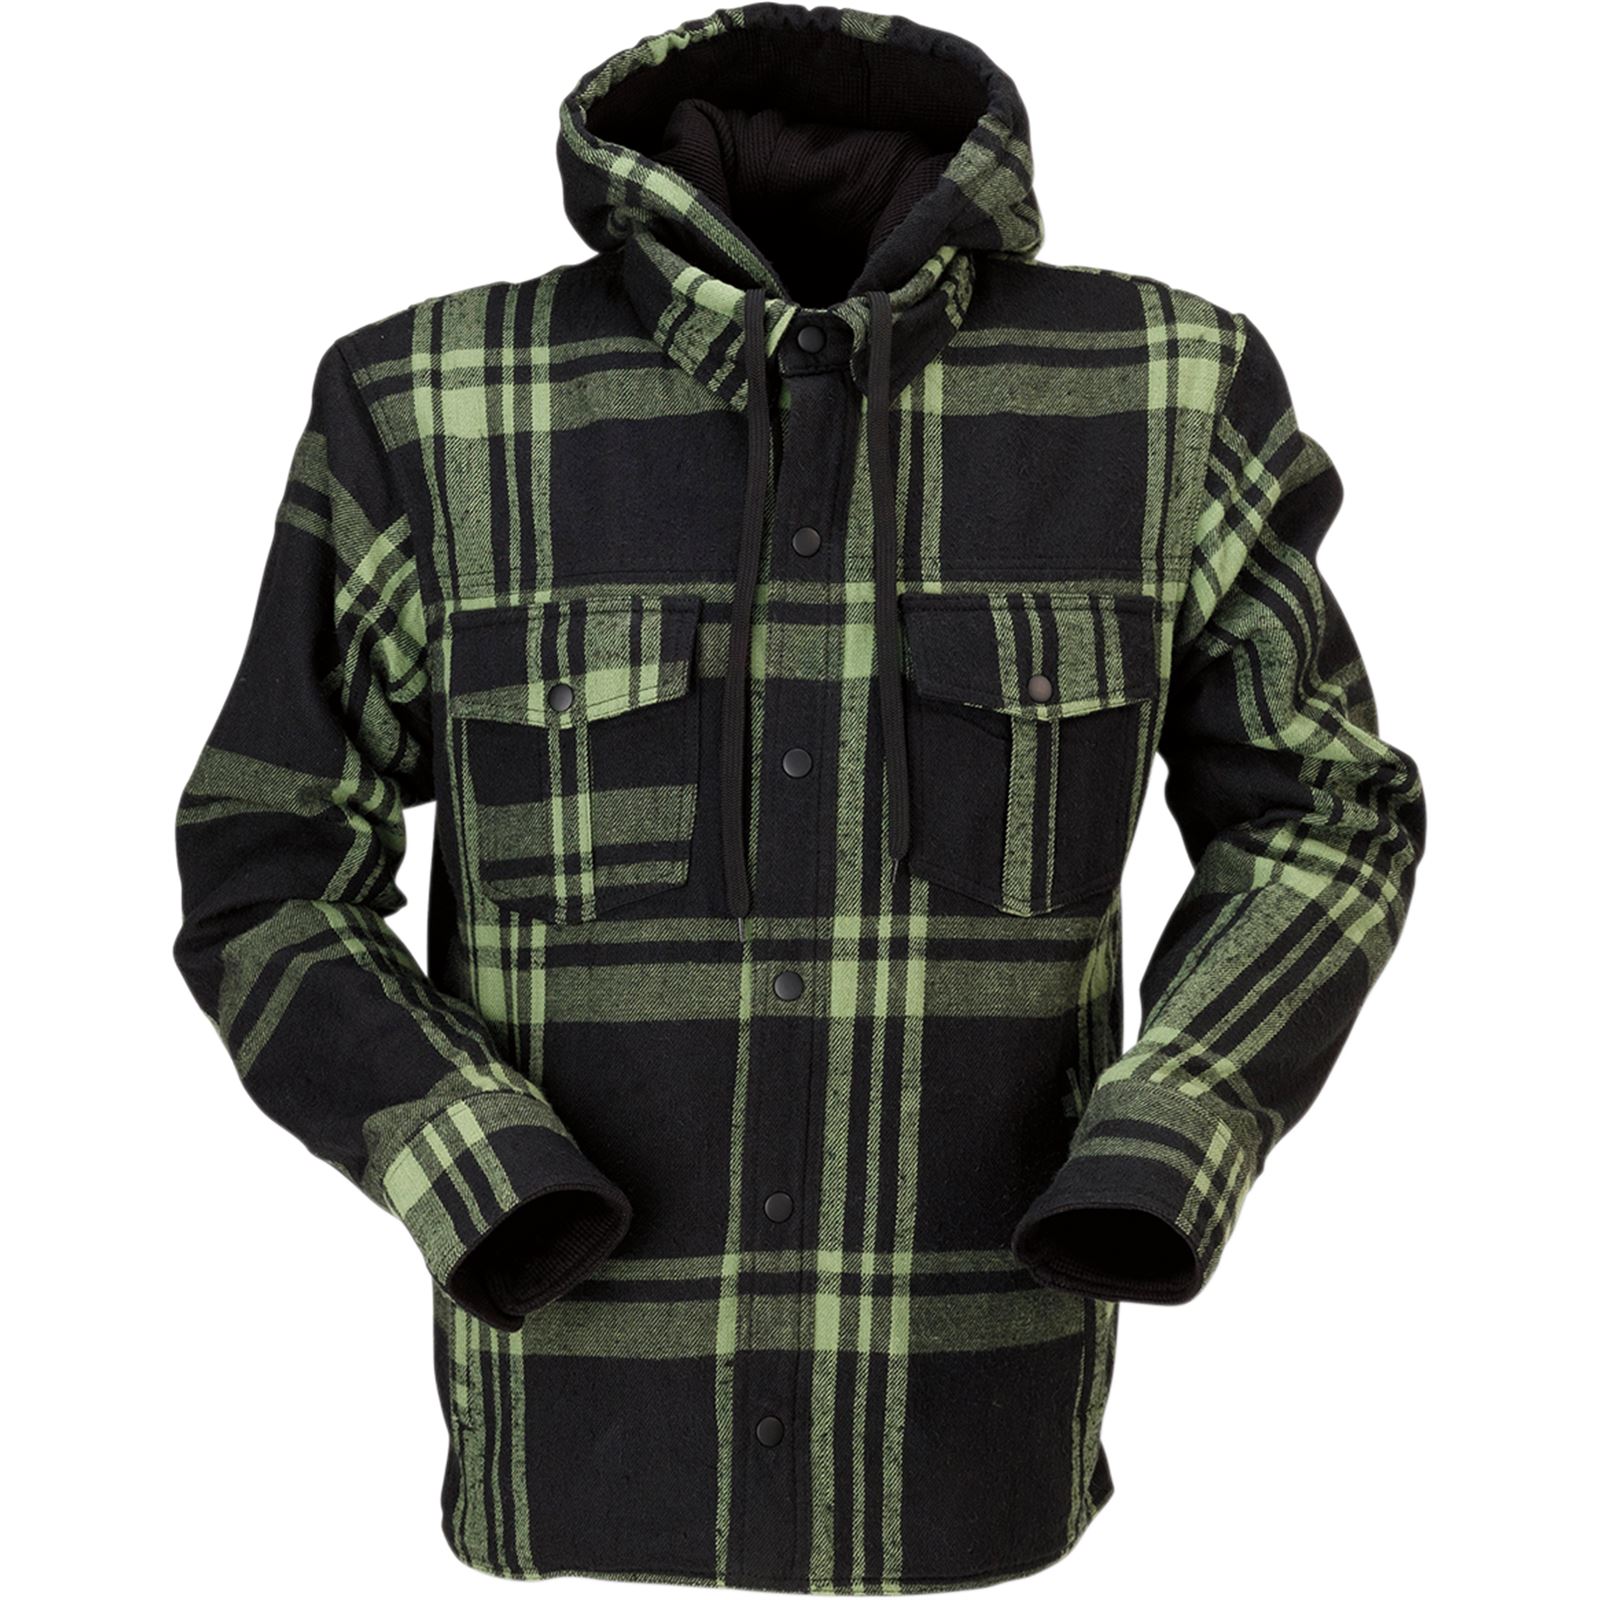 Z1R Timber Flannel Shirt - Olive/Black - 4XL